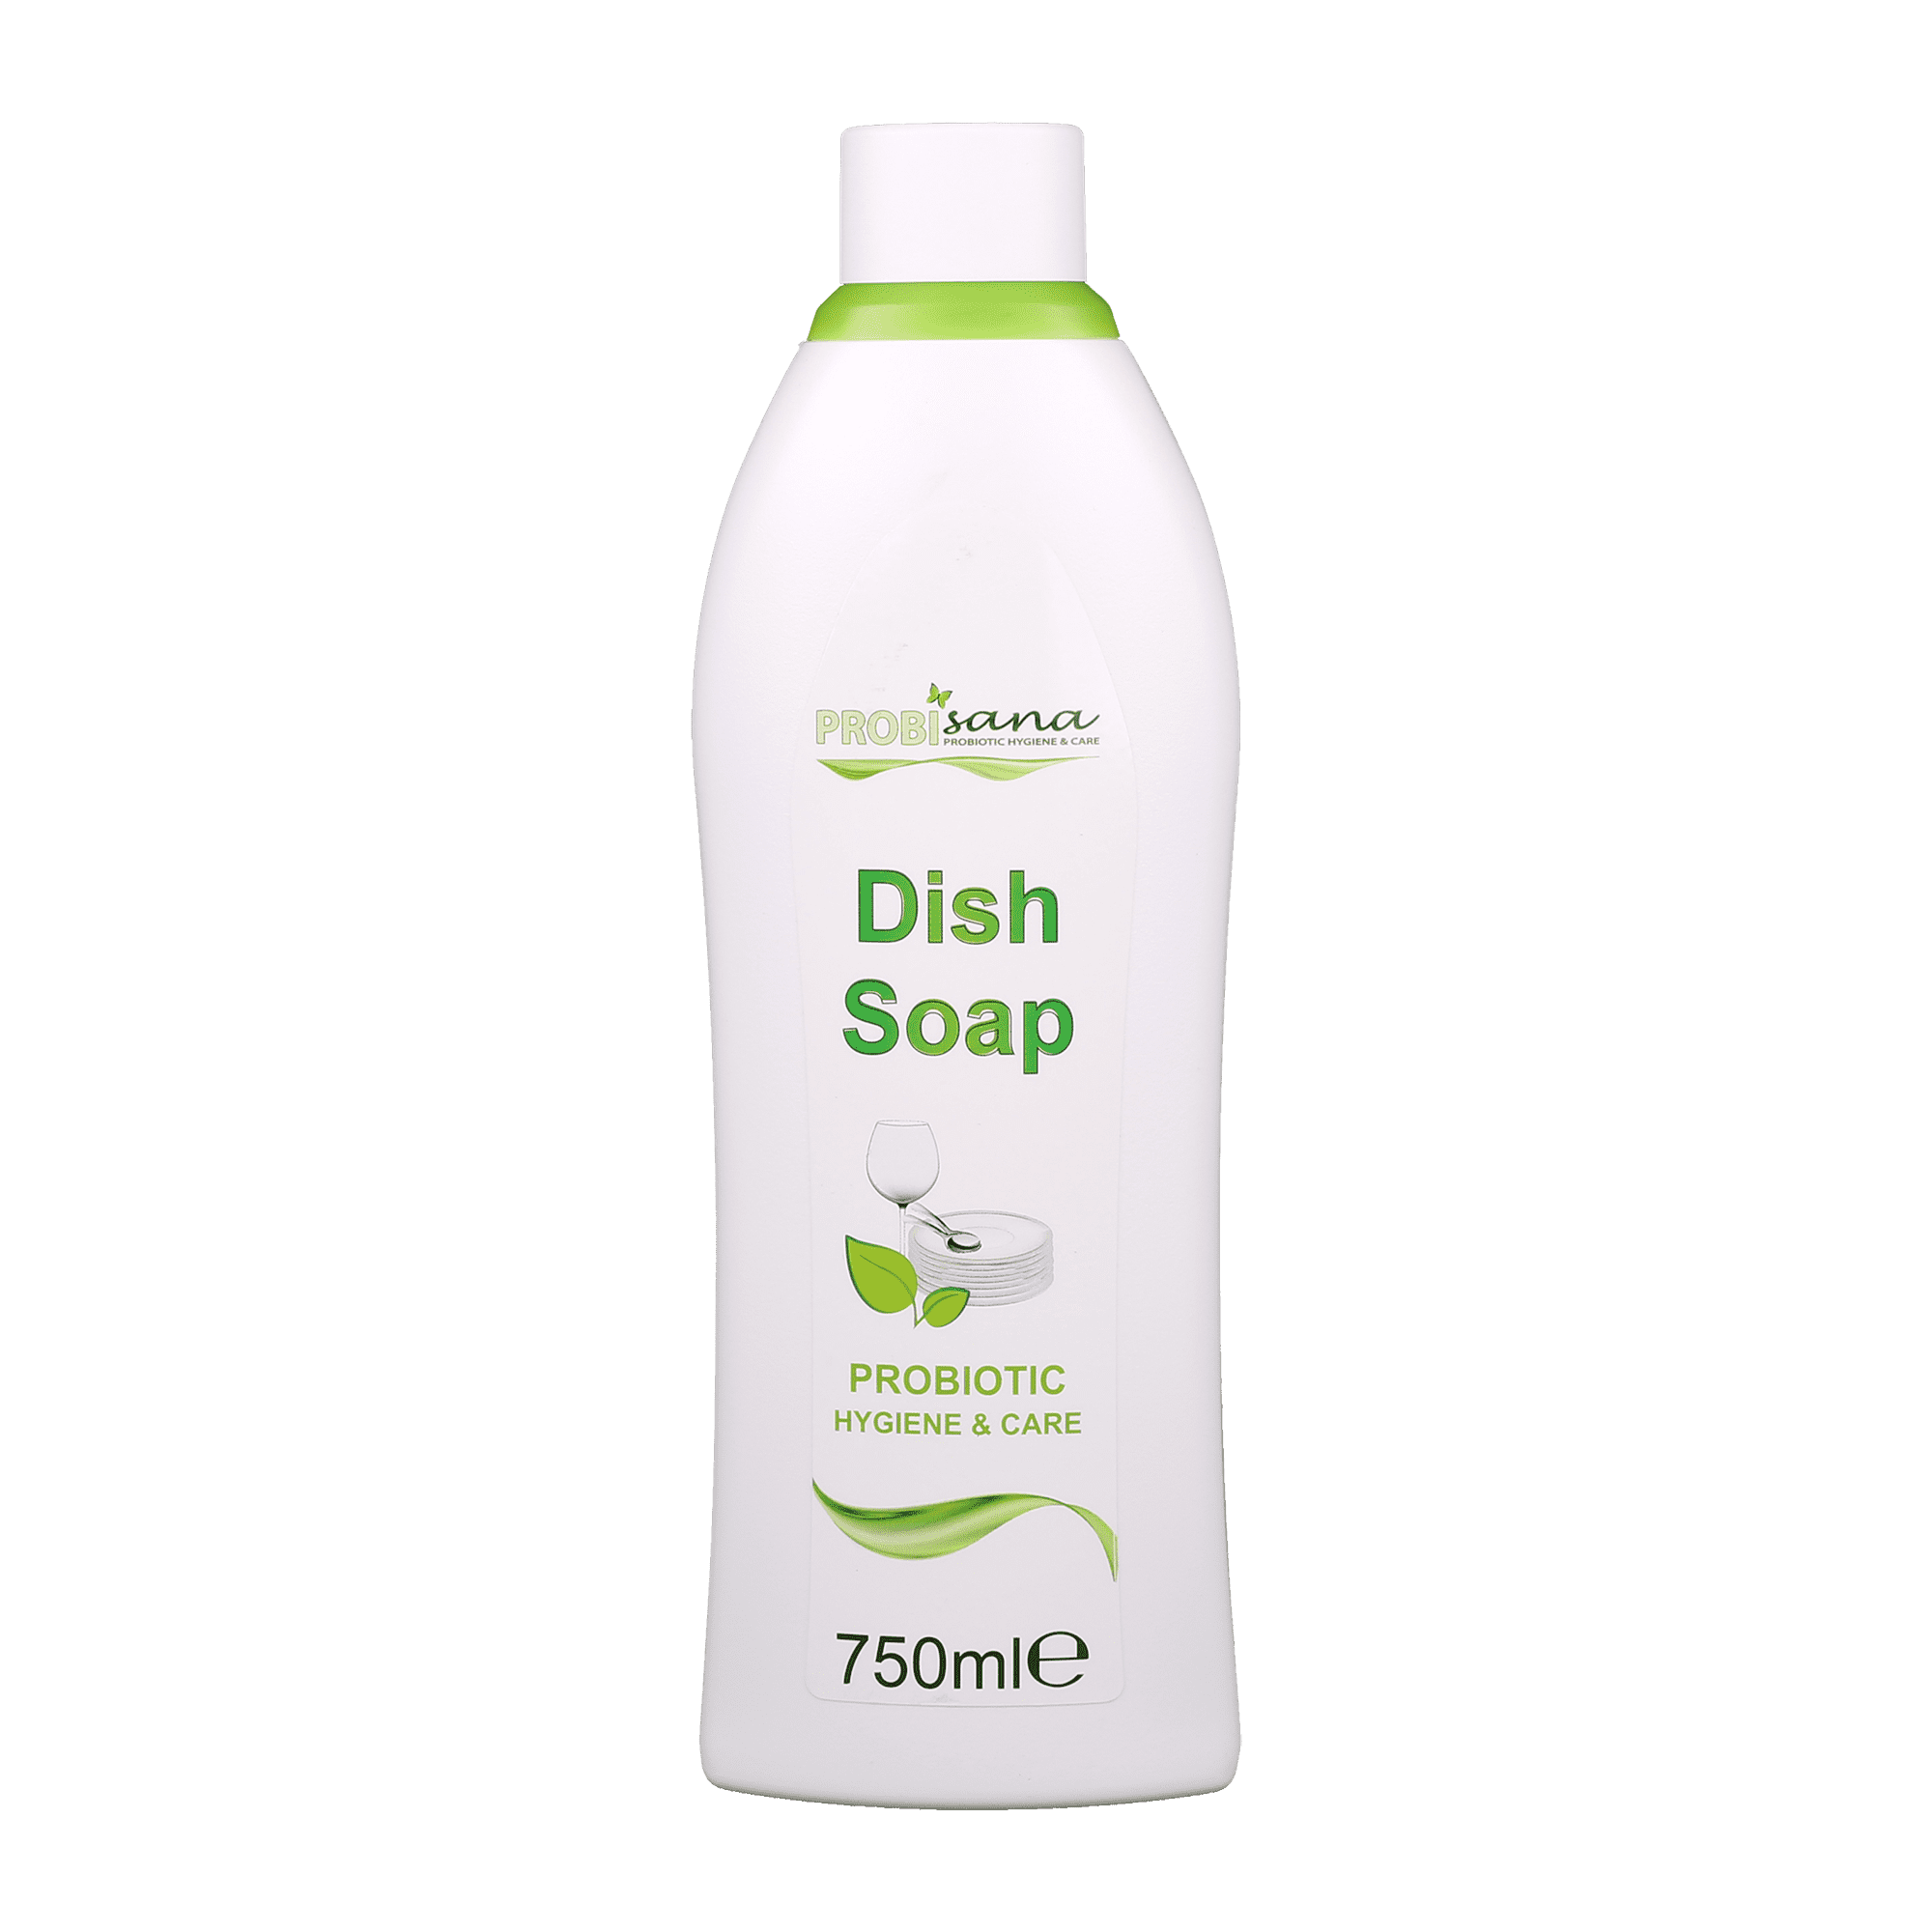 60700 Probisana Dish Soap